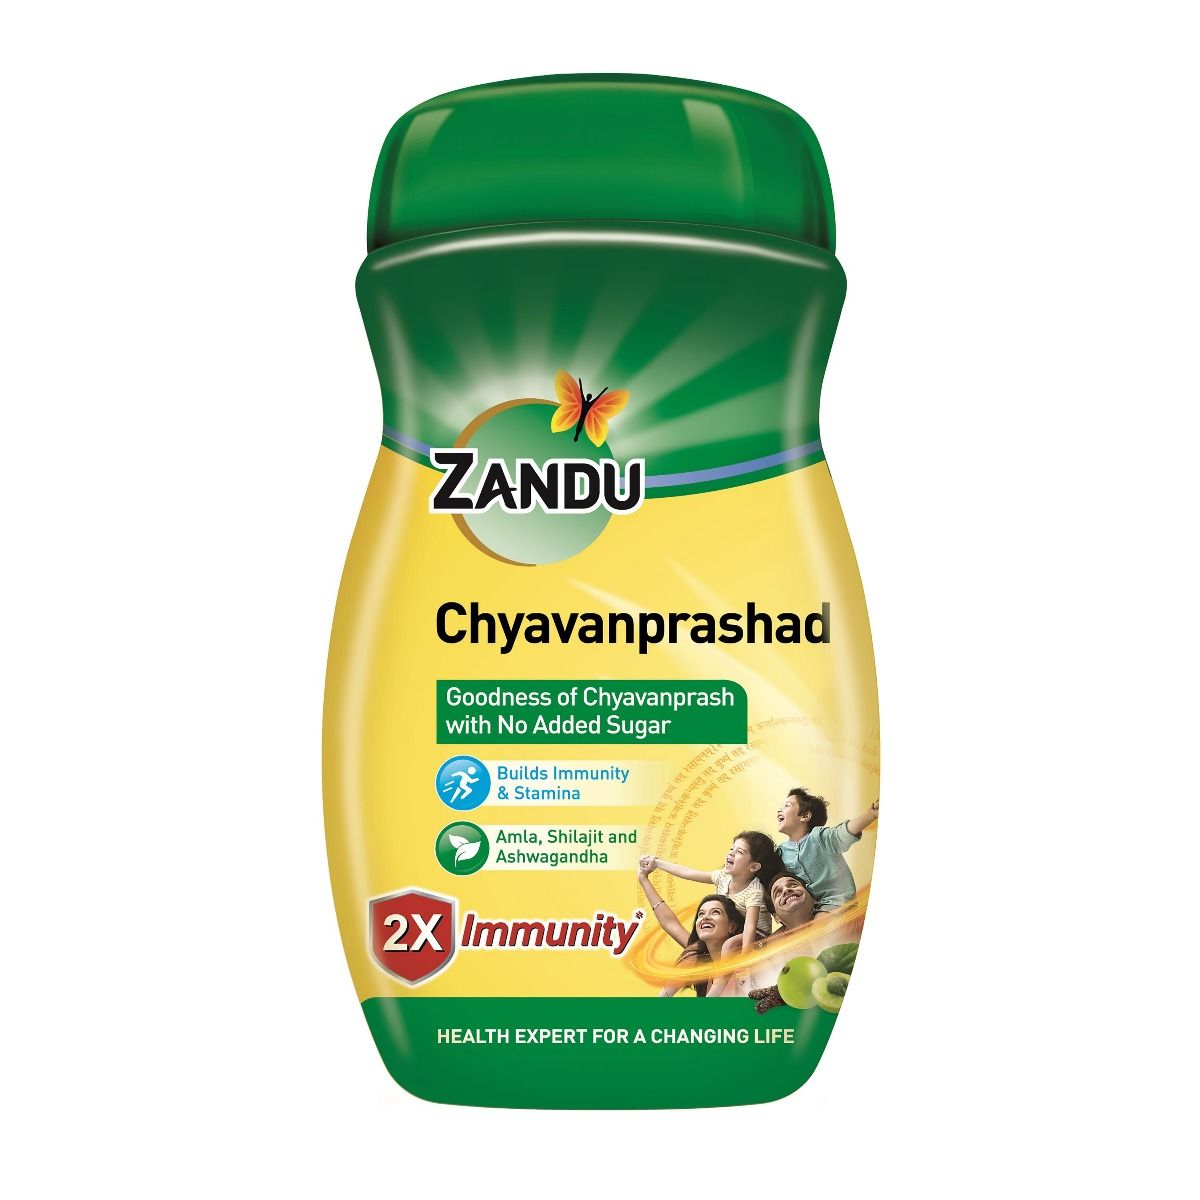 Zandu Sugar Free Chyavanprashad, 450 gm, Pack of 1 